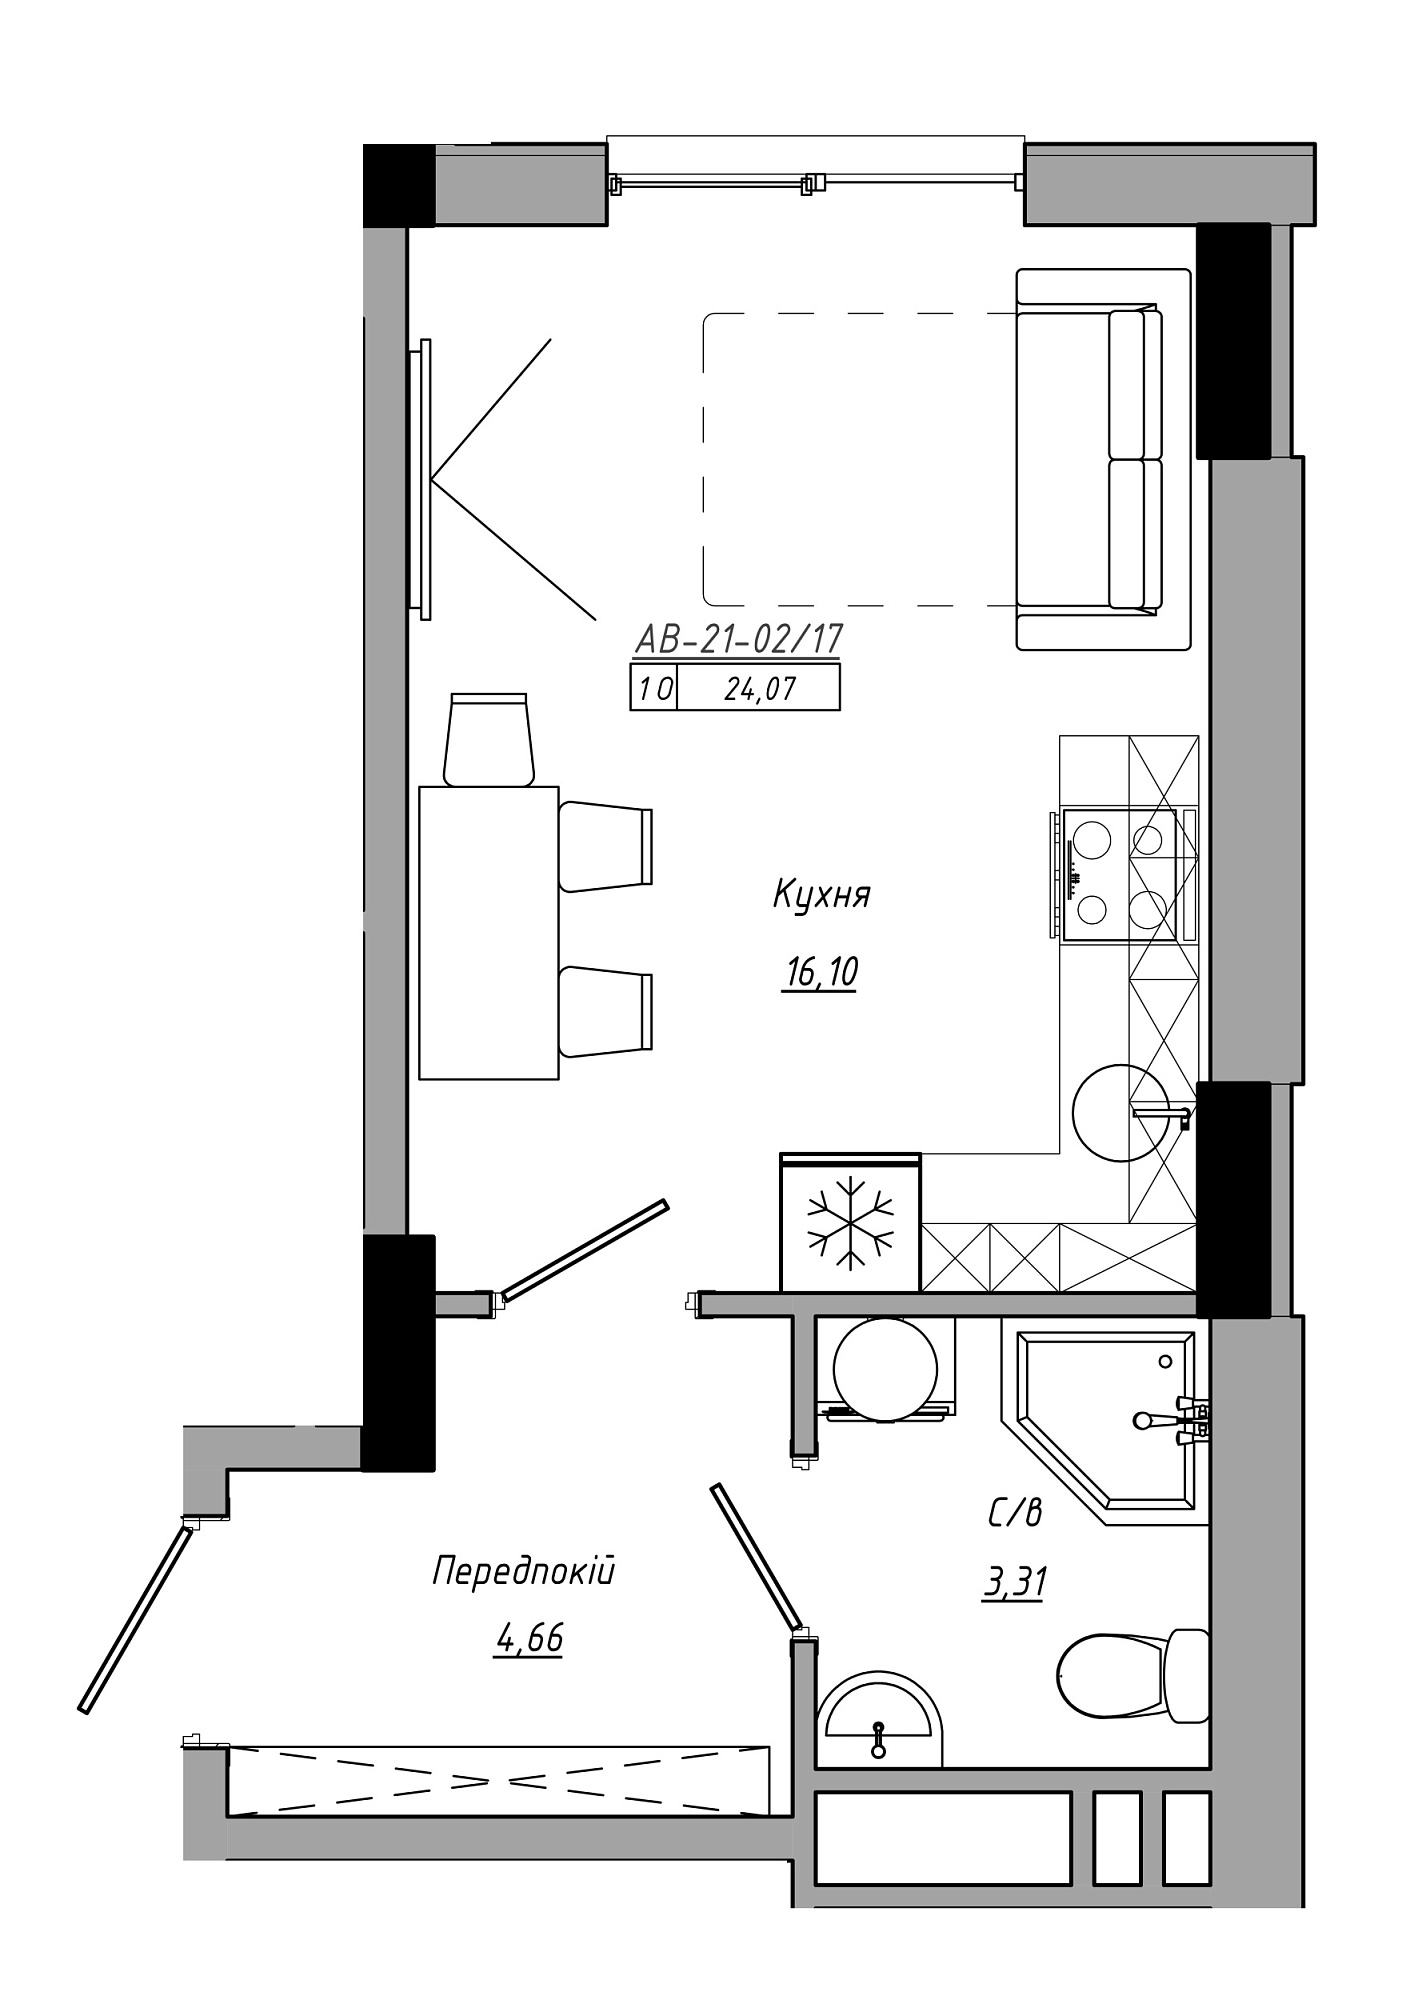 Планировка Smart-квартира площей 24.07м2, AB-21-02/00017.